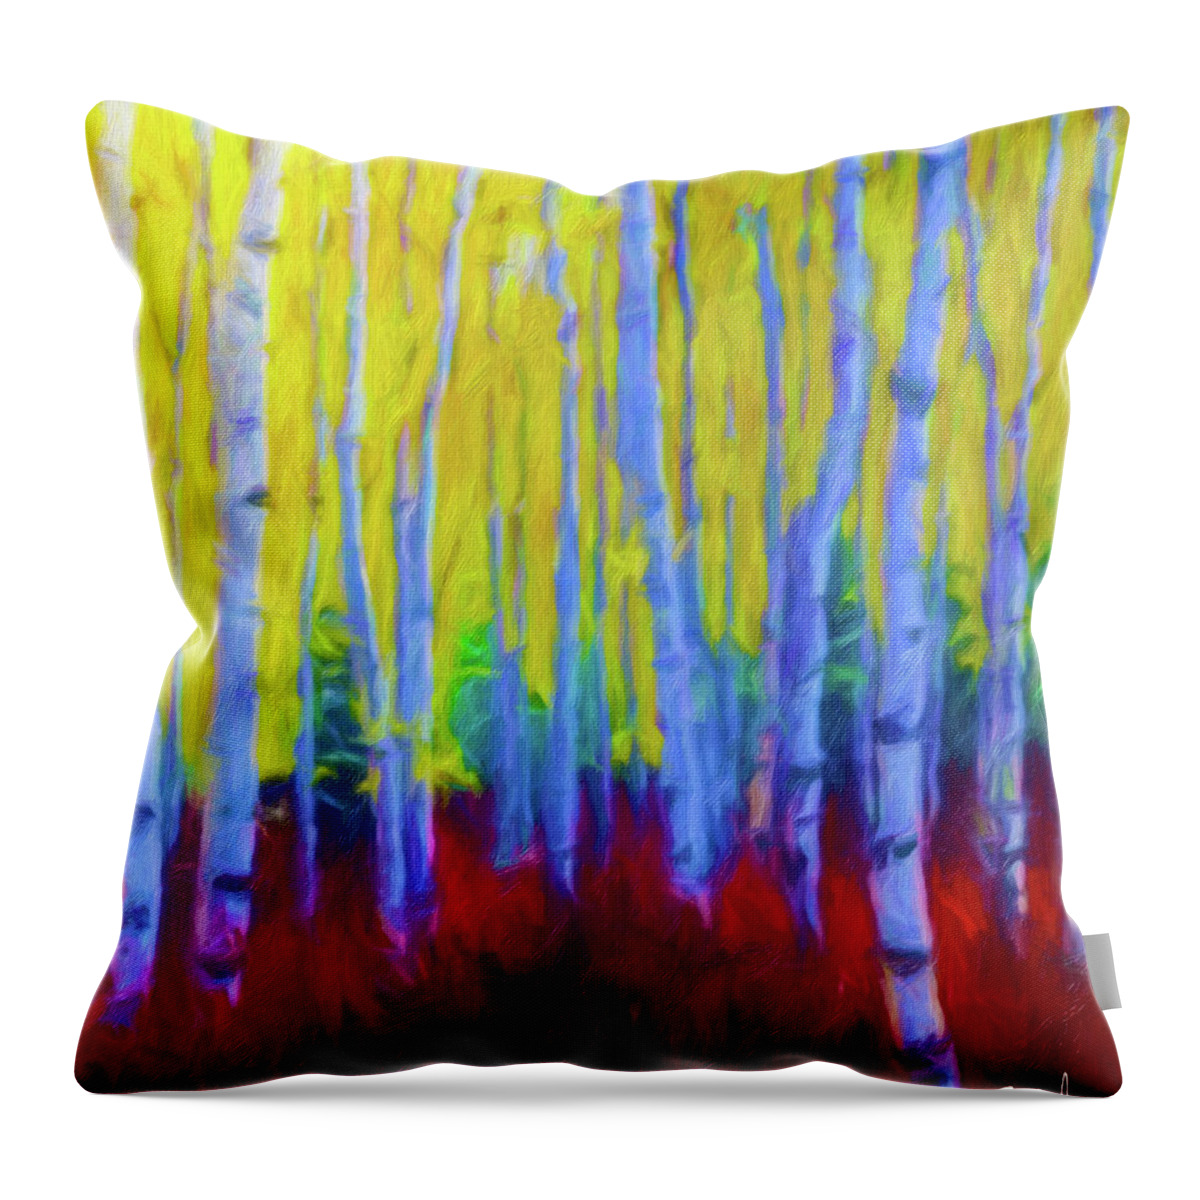 Aspen Throw Pillow featuring the digital art Angel Fire by Terry Fiala